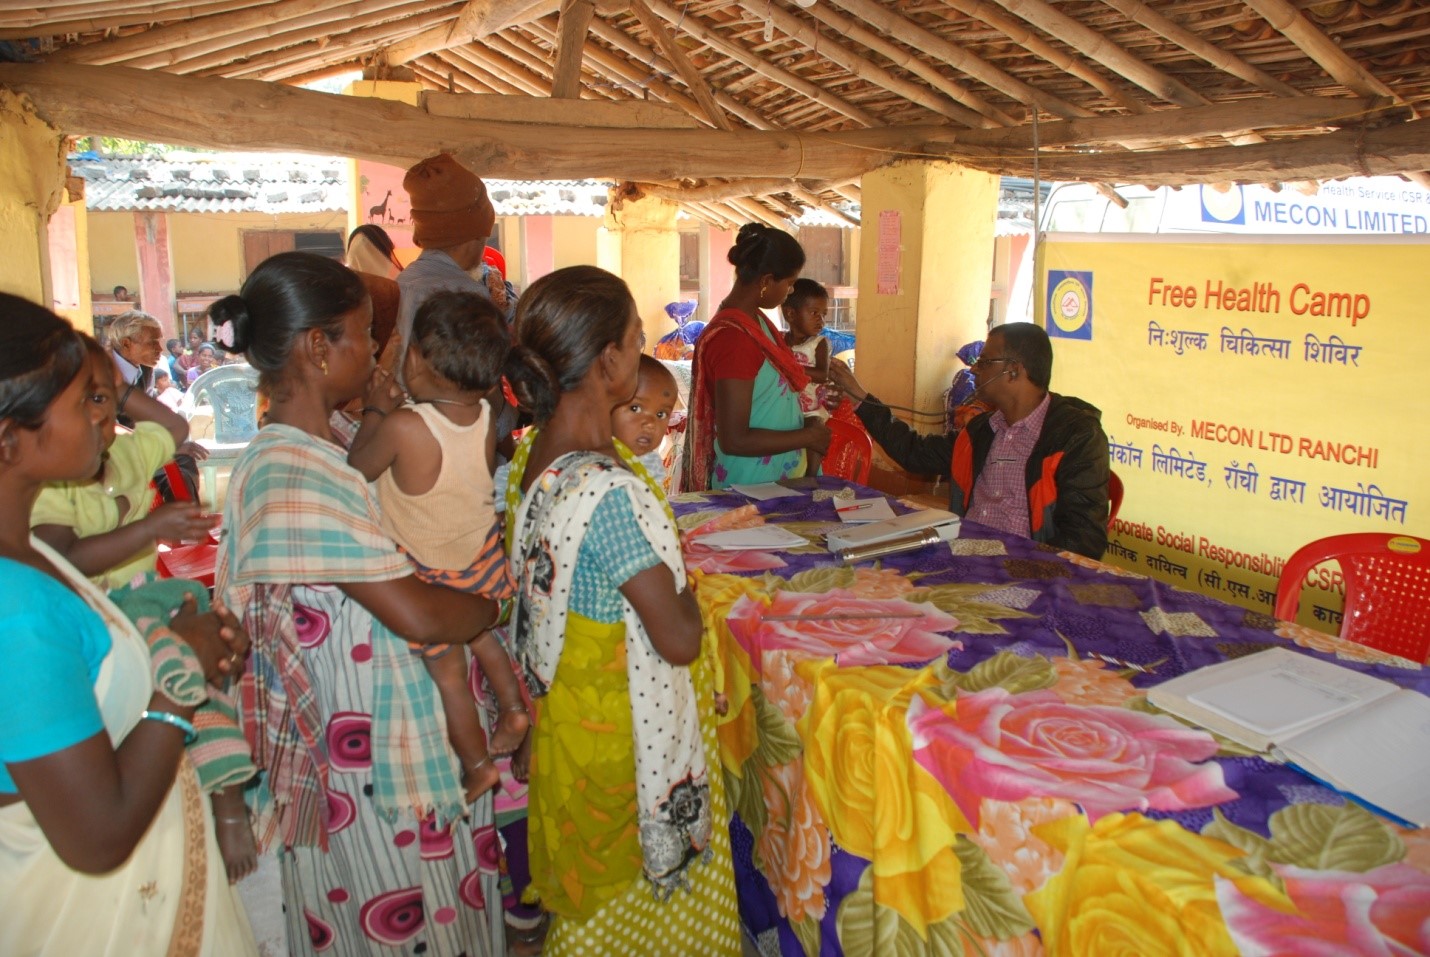 Free Health Camp and medicine distribution organised at Village Sungi Block Karra District Ranchi Jharkhand